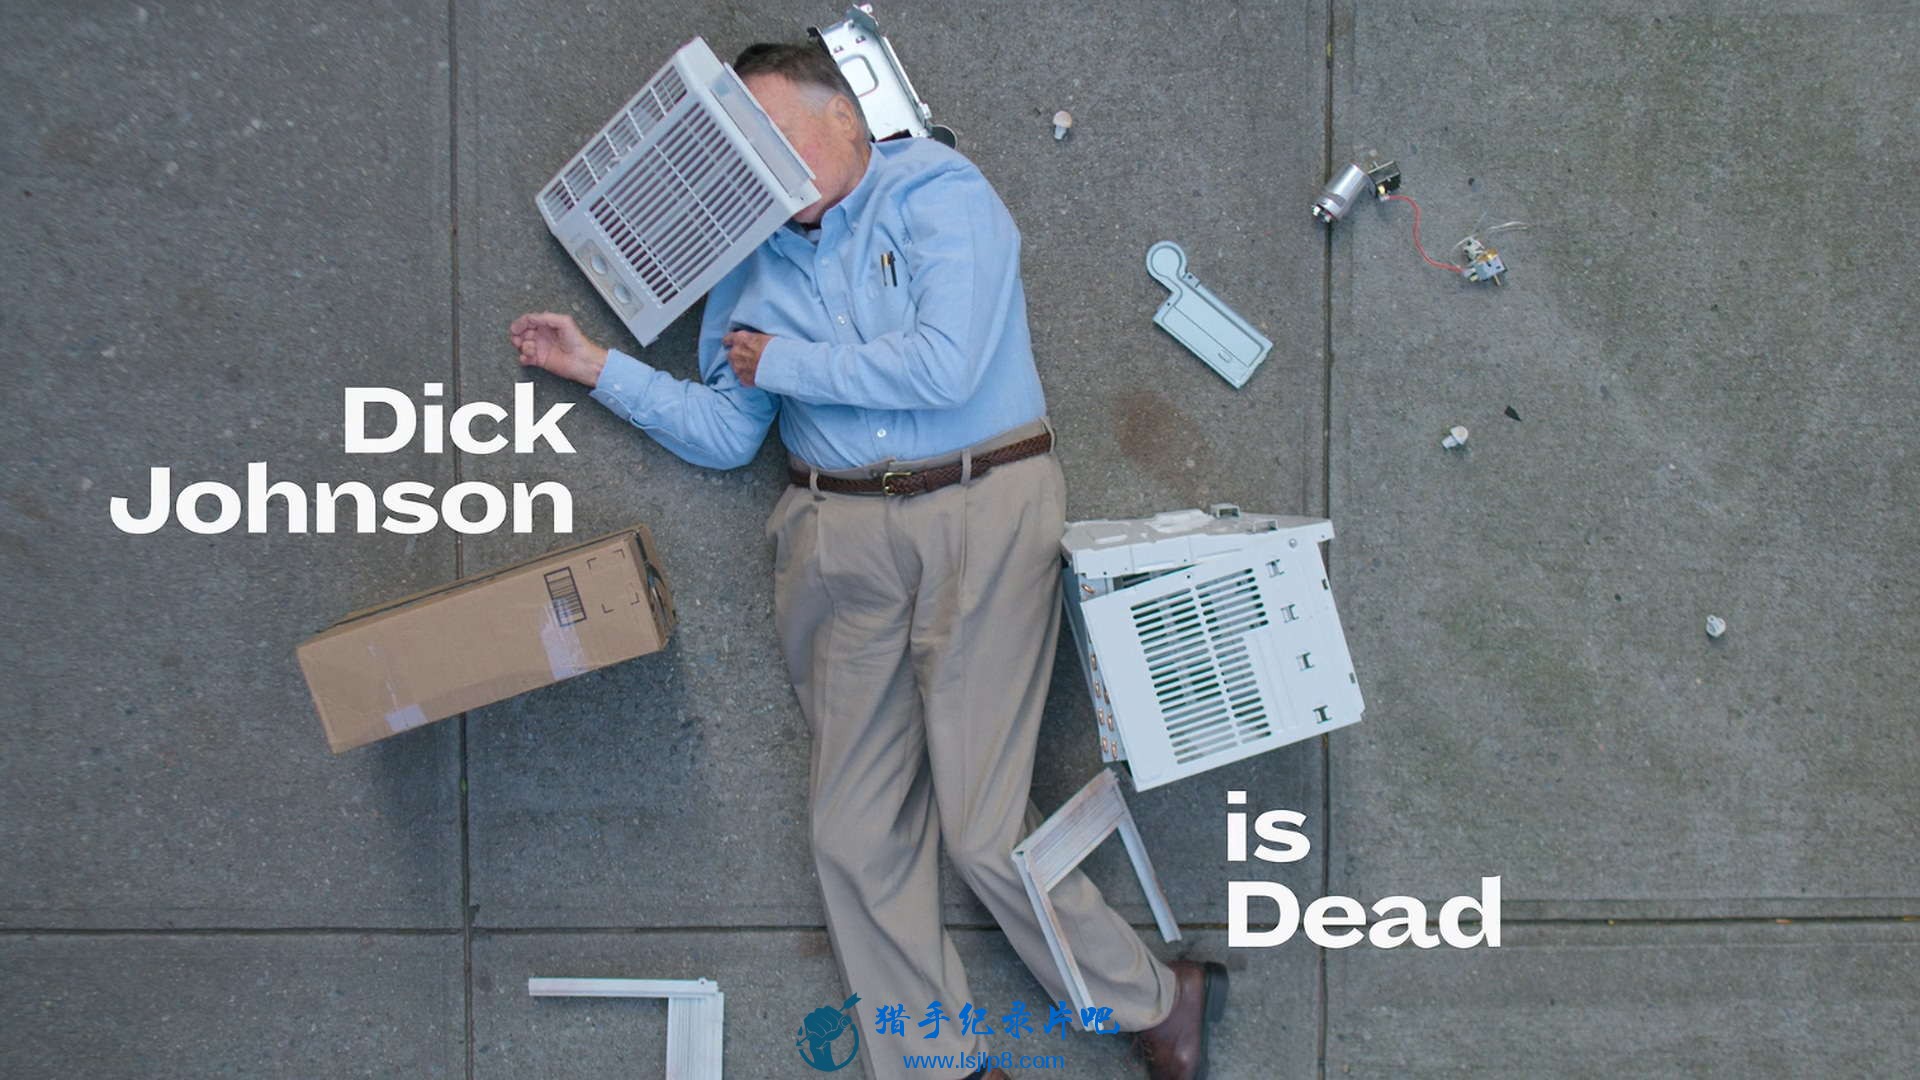 Dick.Johnson.is.Dead.2020.1080p.NF.WEB-DL.DDP5.1.x264-PTP.mkv_20201007_170253.99.jpg